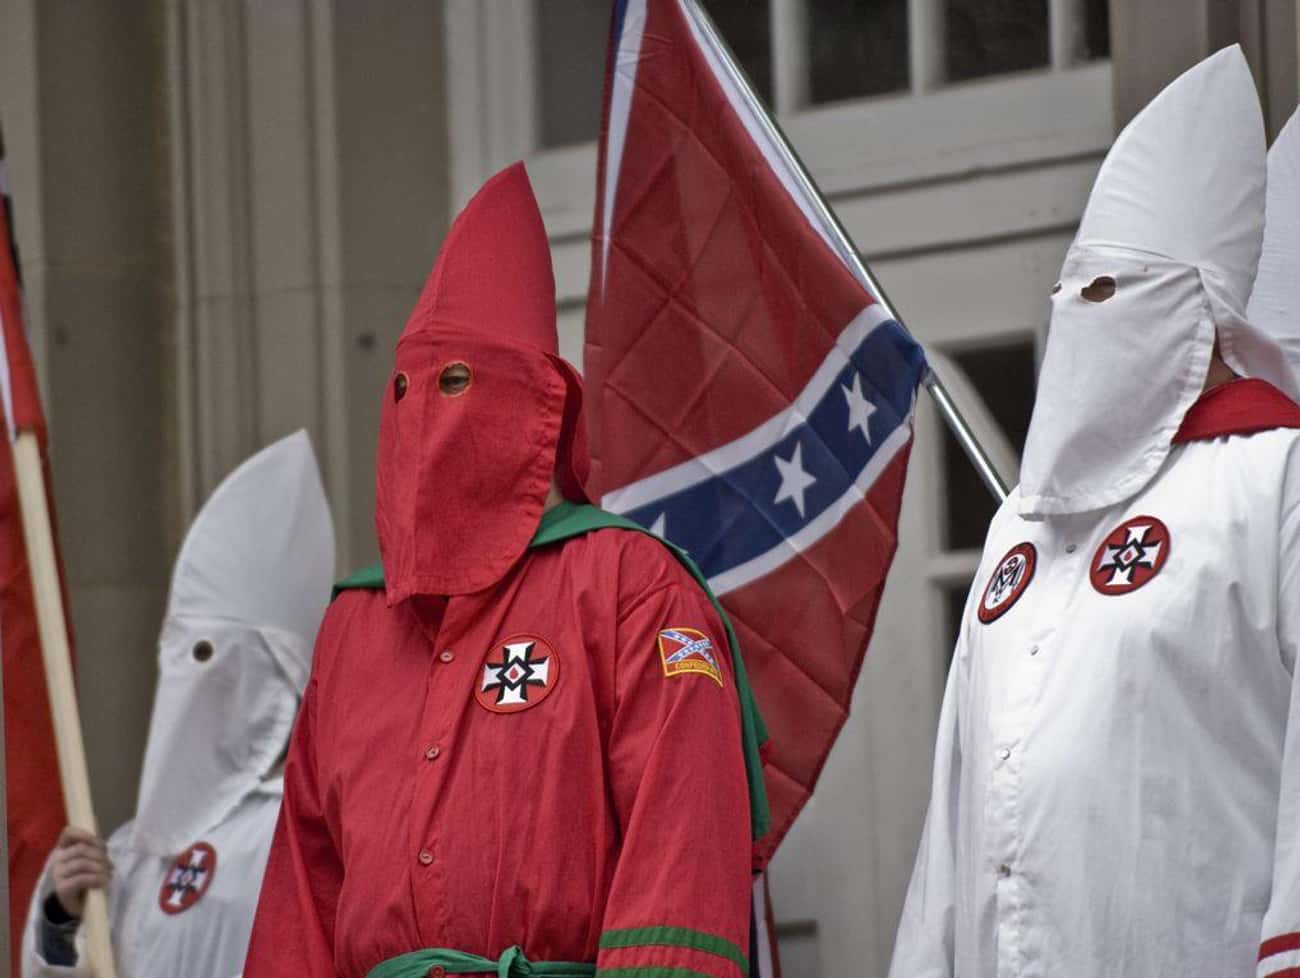 The Ku Klux Klan Were Very Anti-Republican